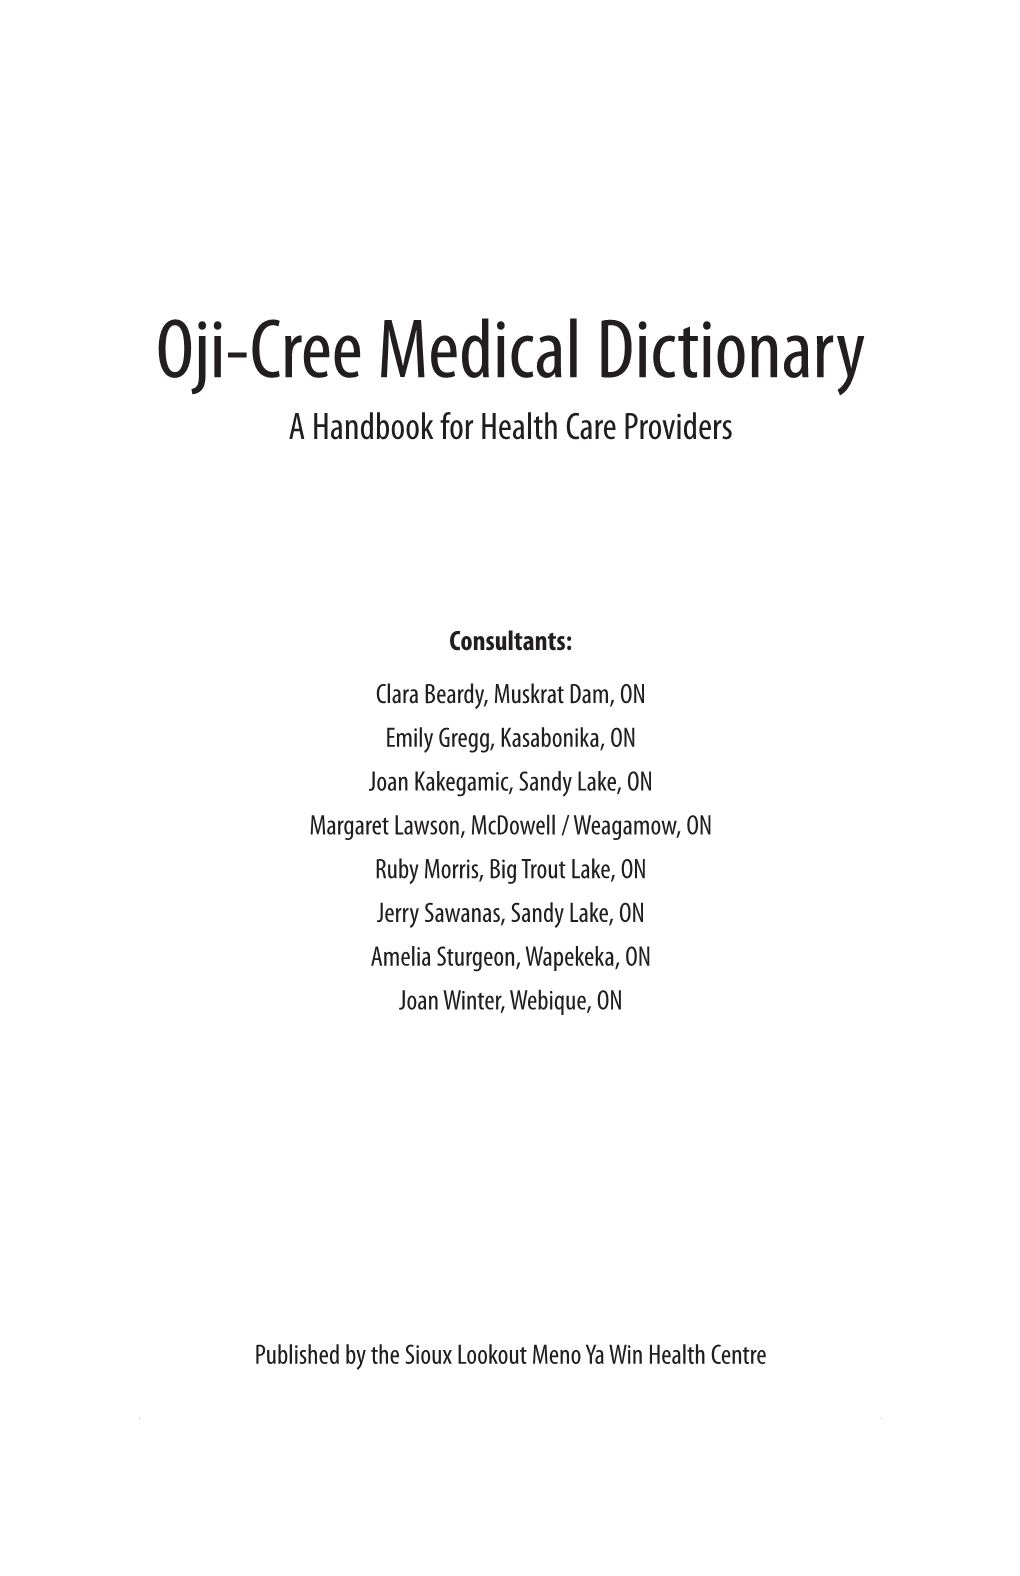 Oji-Cree Medical Dictionary a Handbook for Health Care Providers